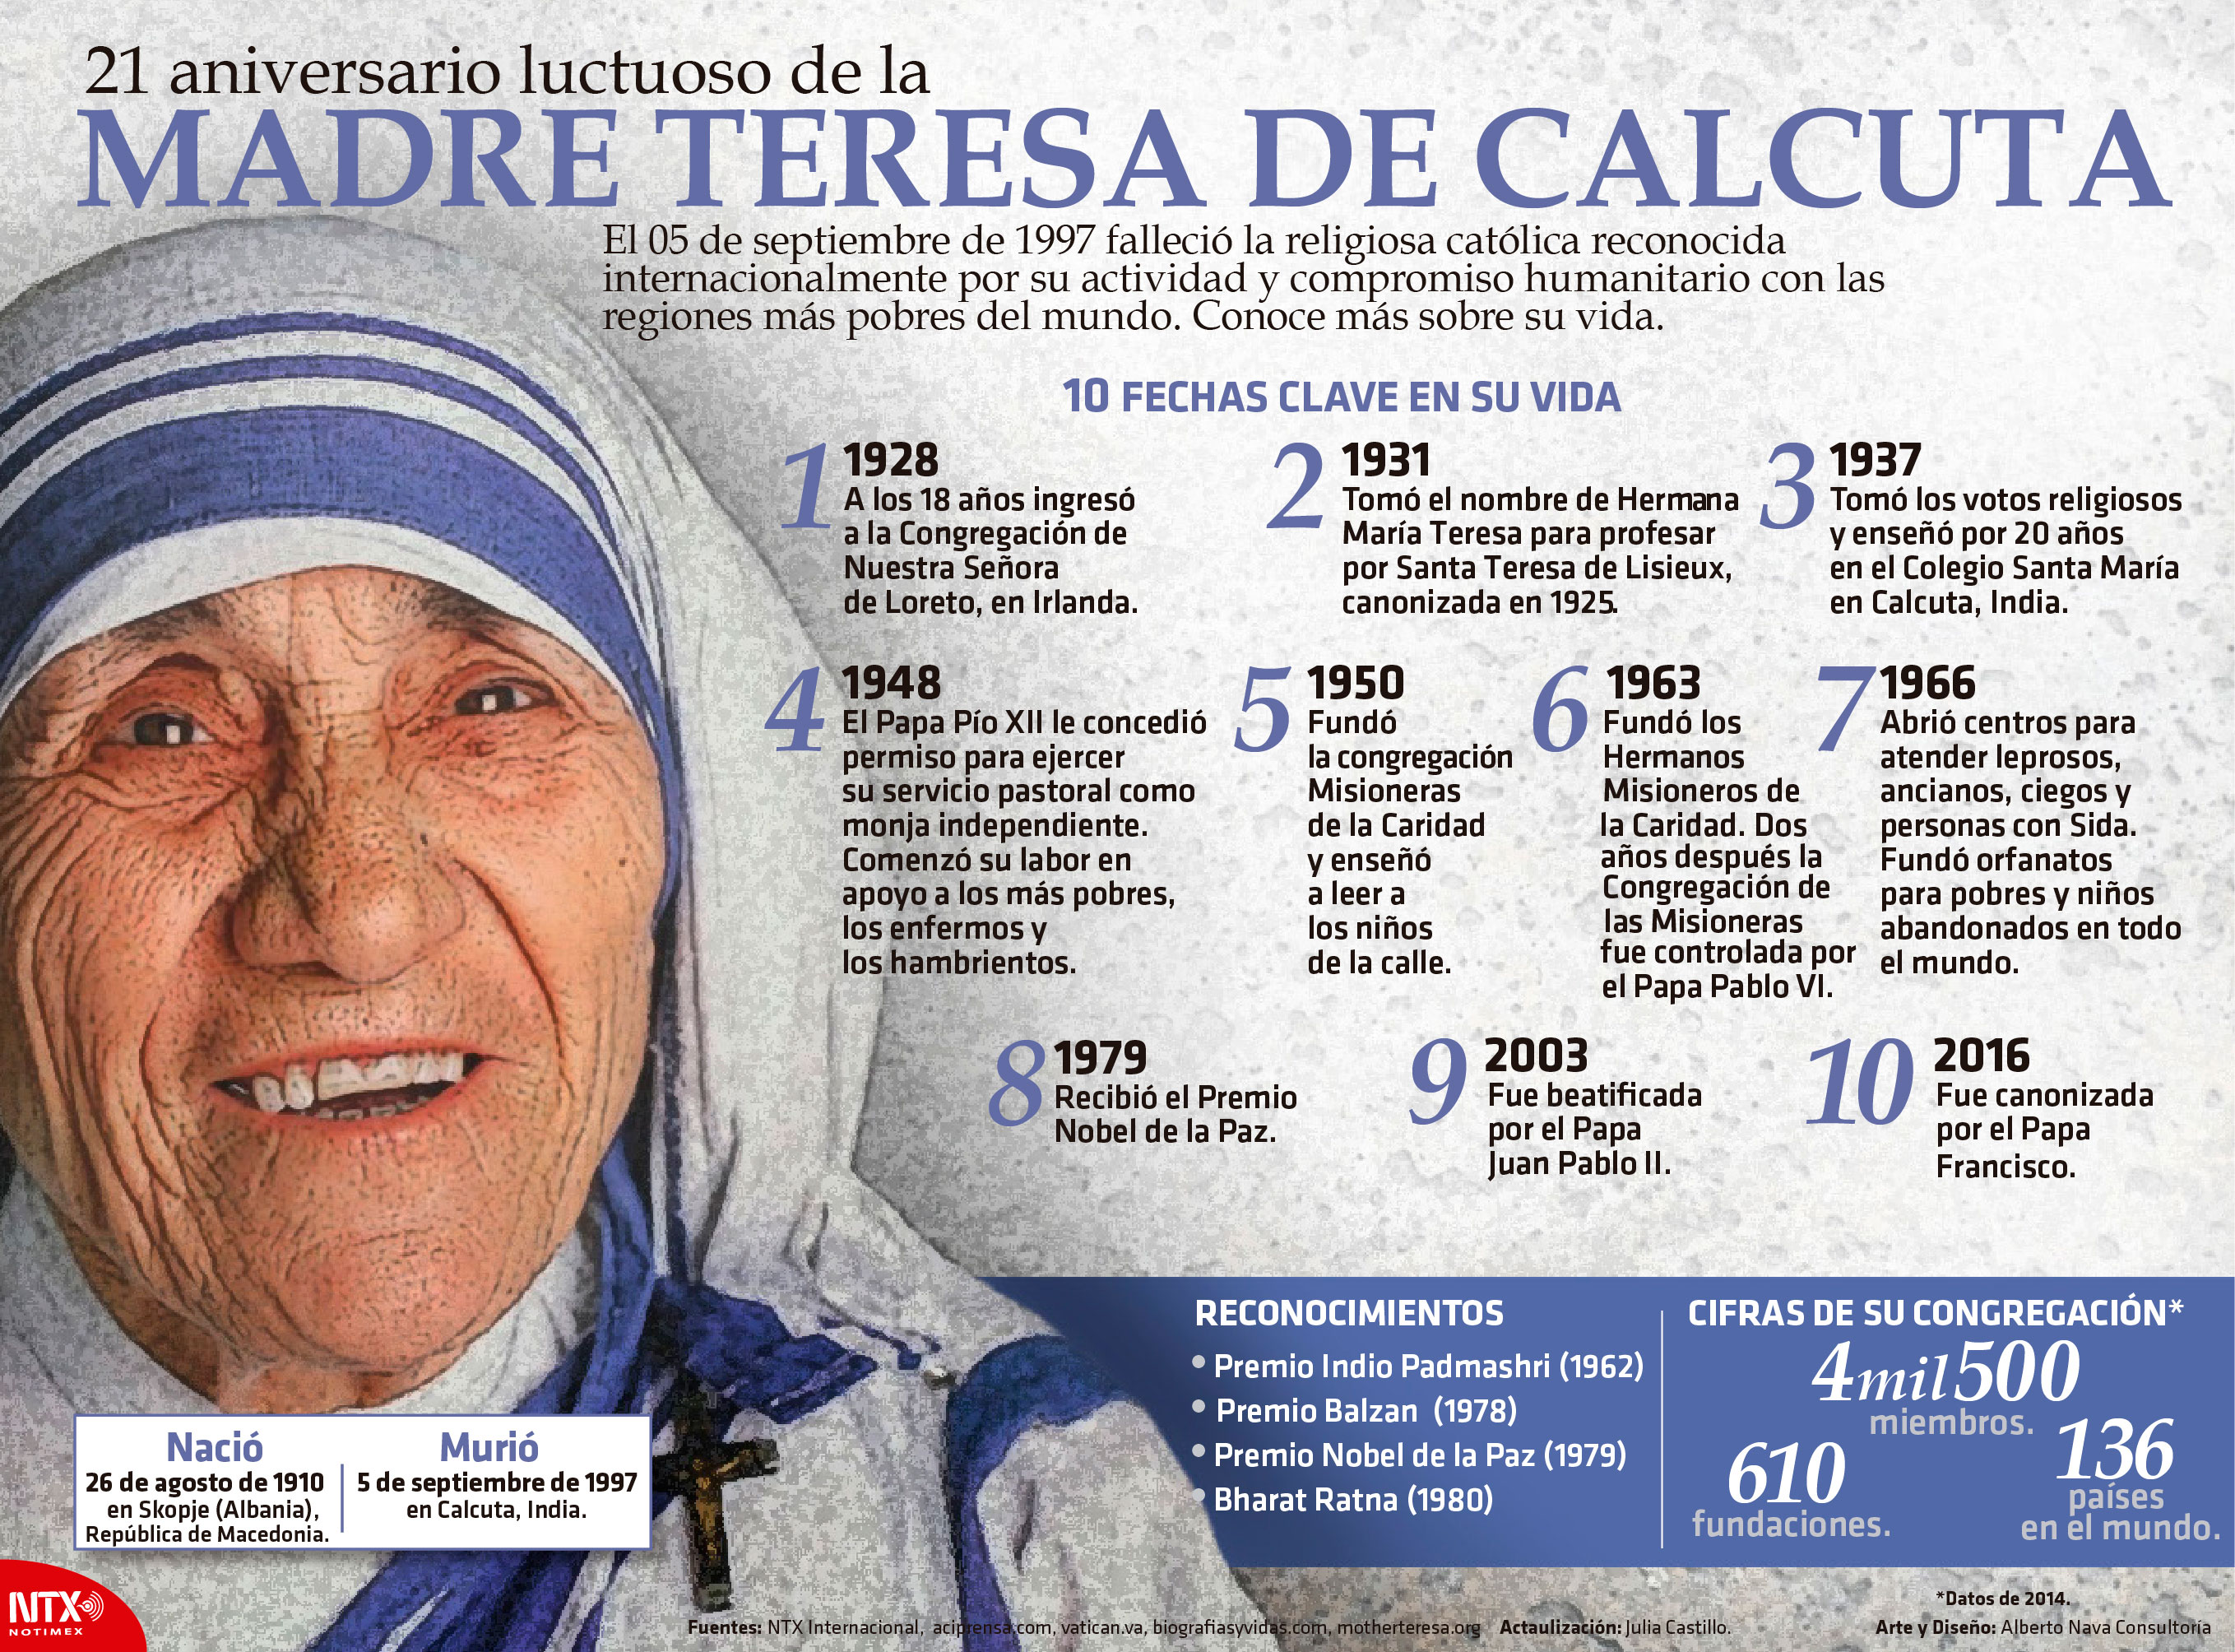 21 aniversario luctuoso de la Madre Teresa de Calcuta